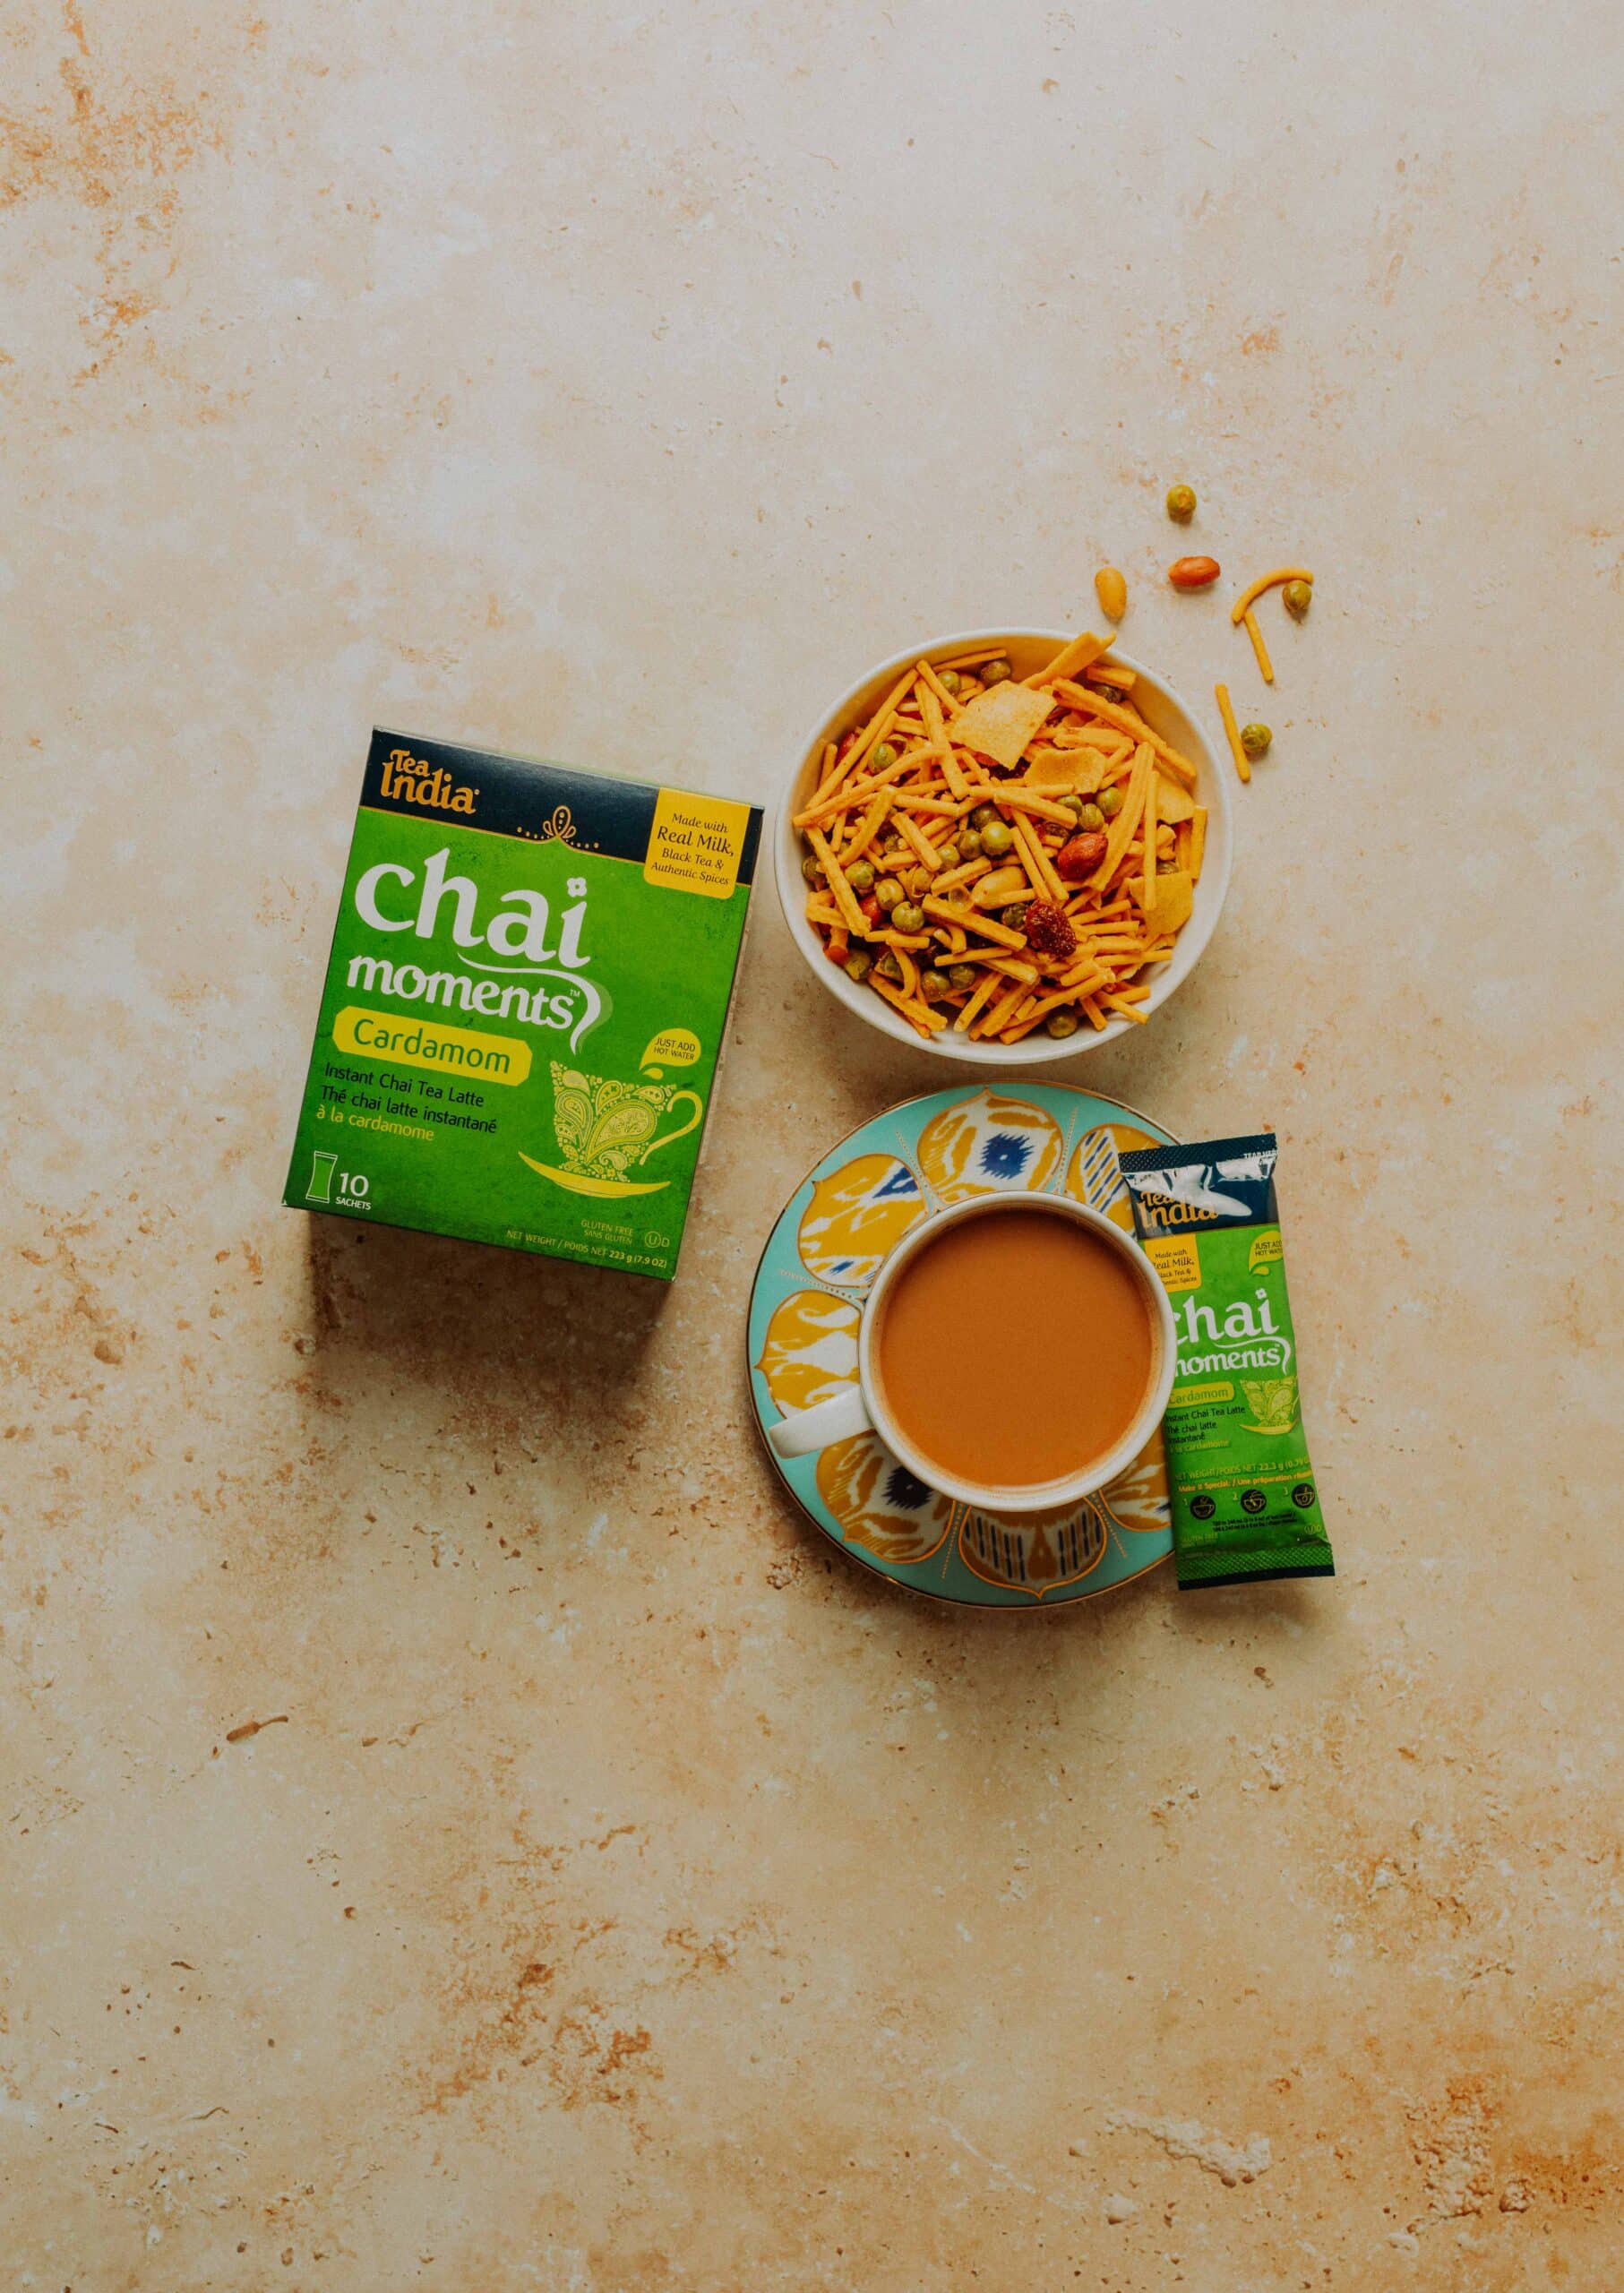 Tea India Chai Moments on a table